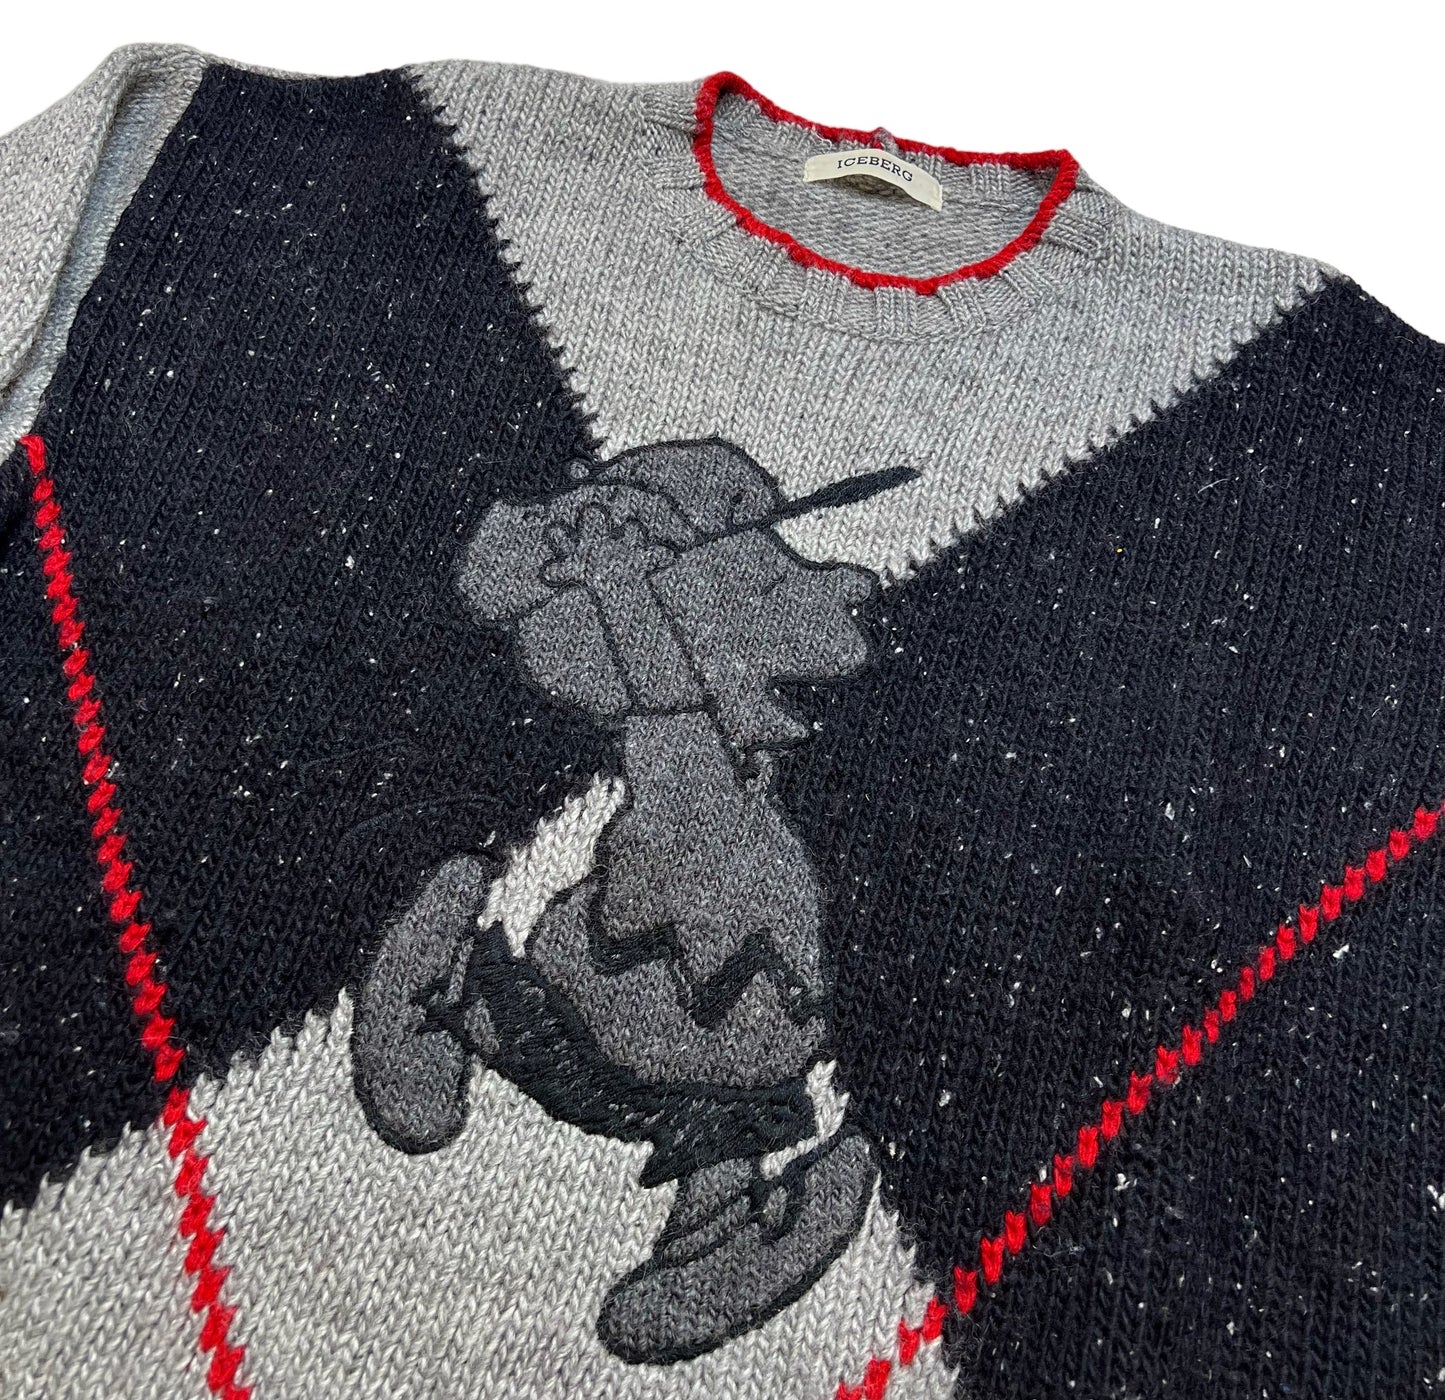 1990s Iceberg "Charlie Brown" Peanuts sweater